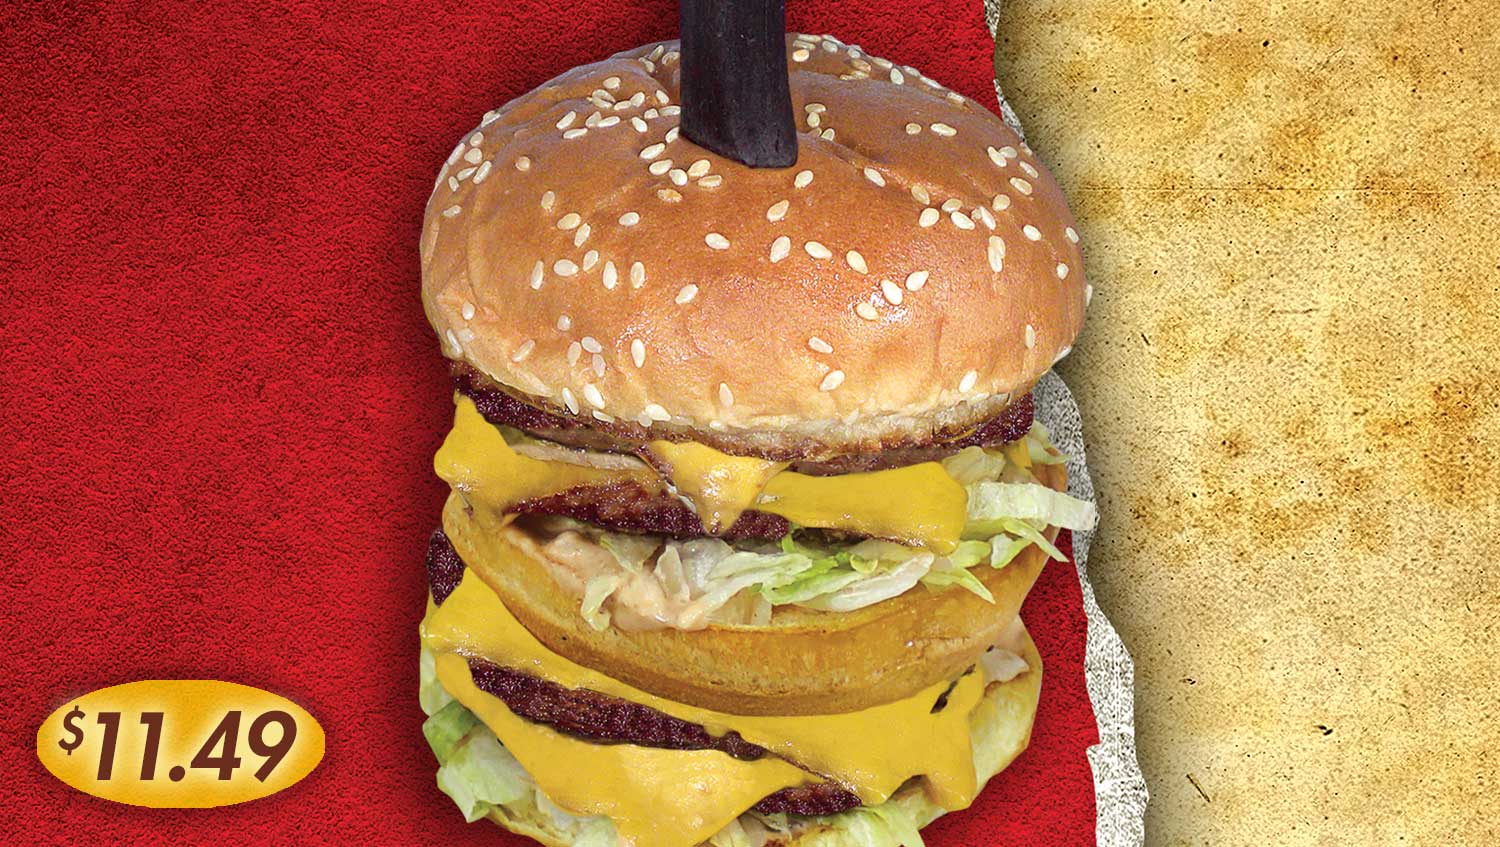 Rockne's Burger Menu Item